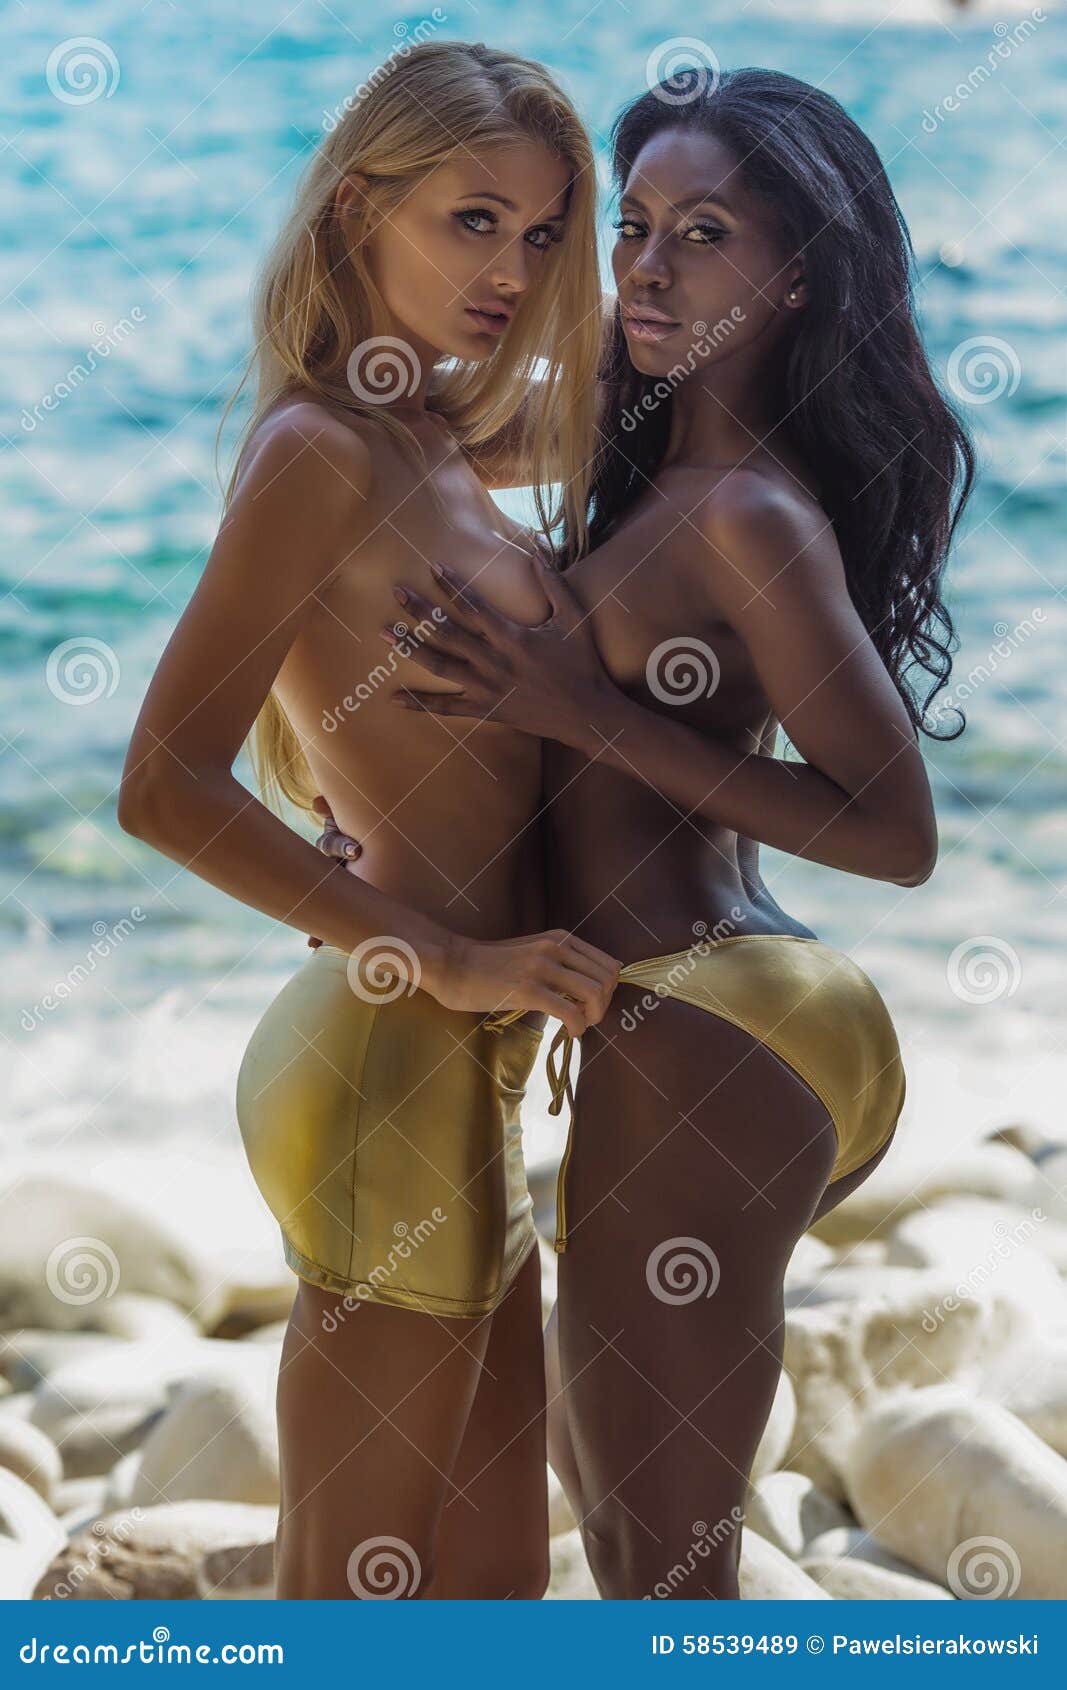 Nude beach gurls